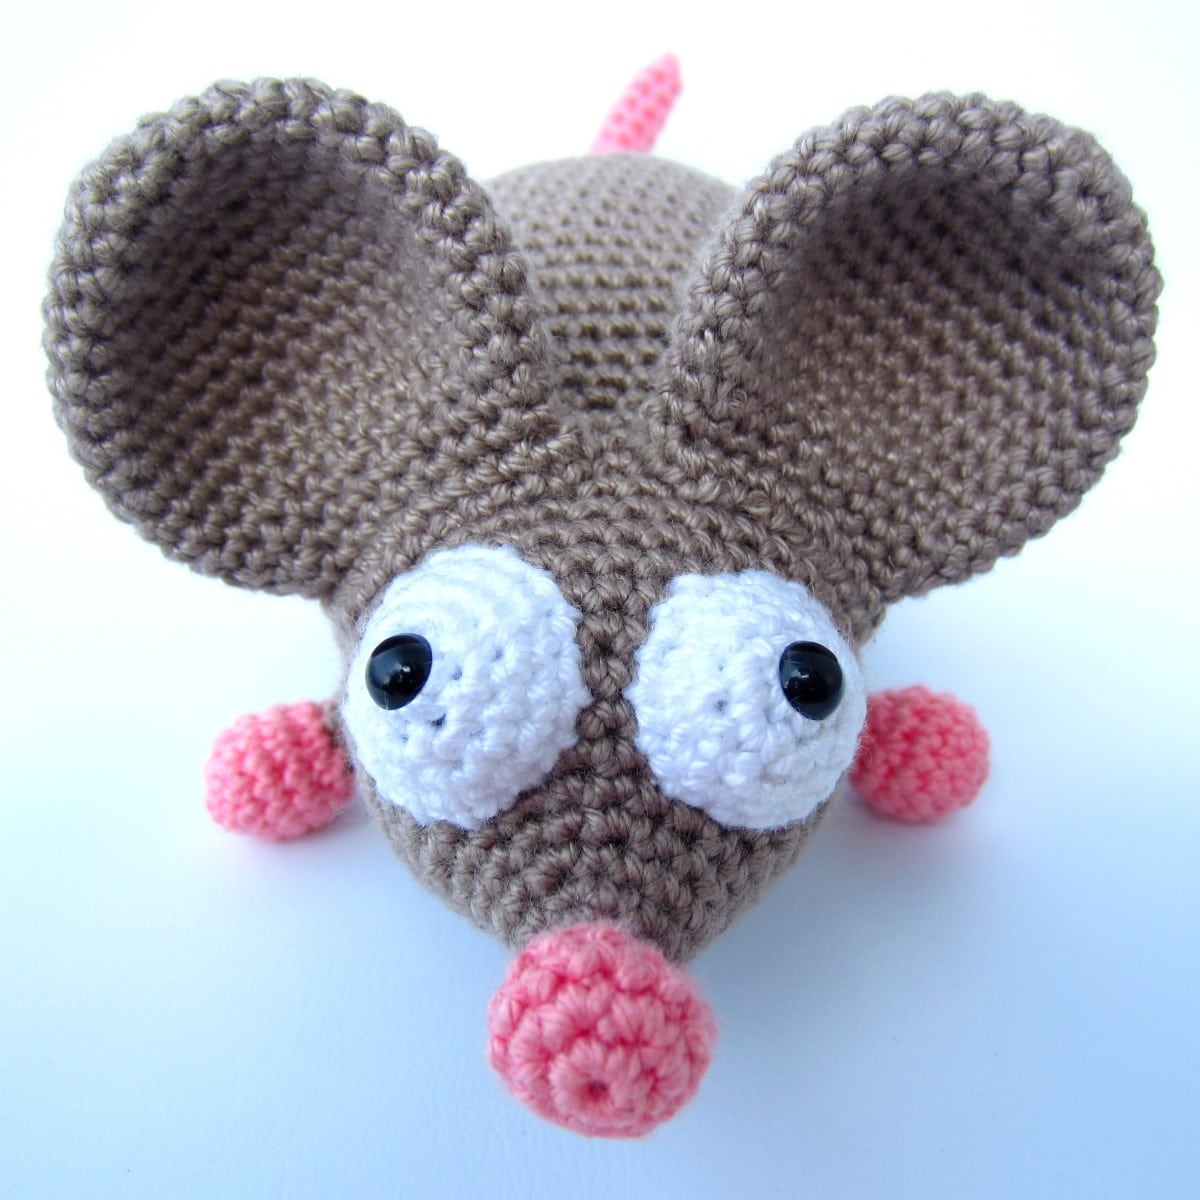 Amigurumi-Crochet-Mouse-Featured-Image.jpg